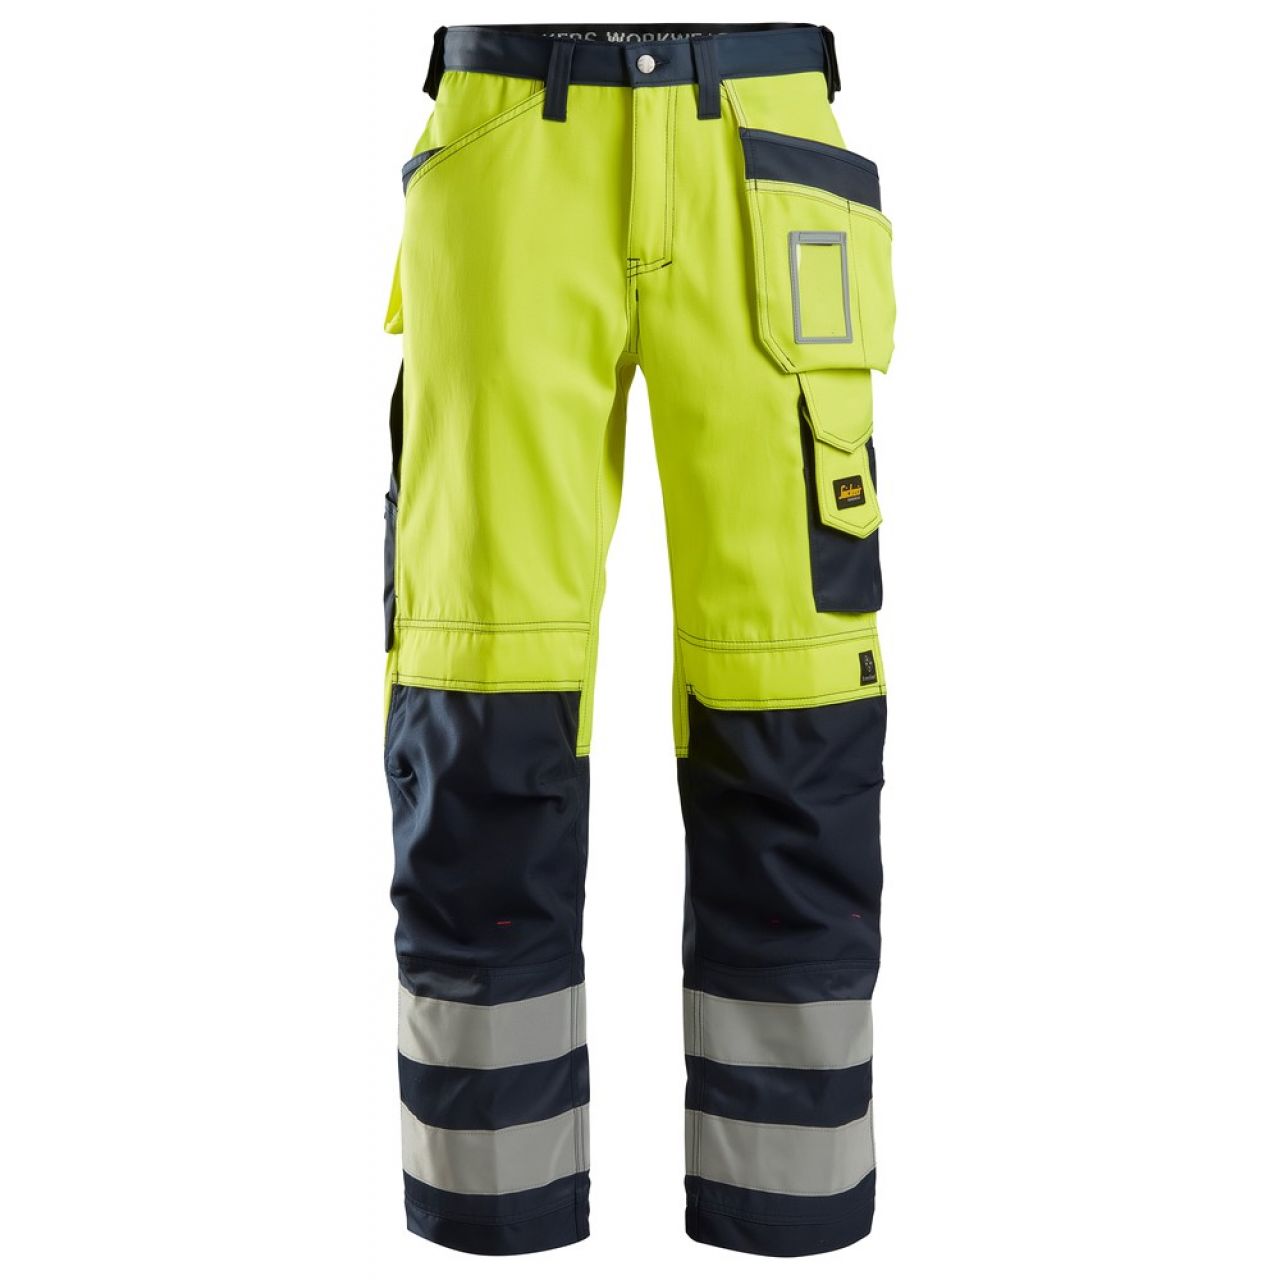 3233 Pantalones largos de trabajo de alta visibilidad clase 2 con bolsillos flotantes amarillo-azul marino talla 112